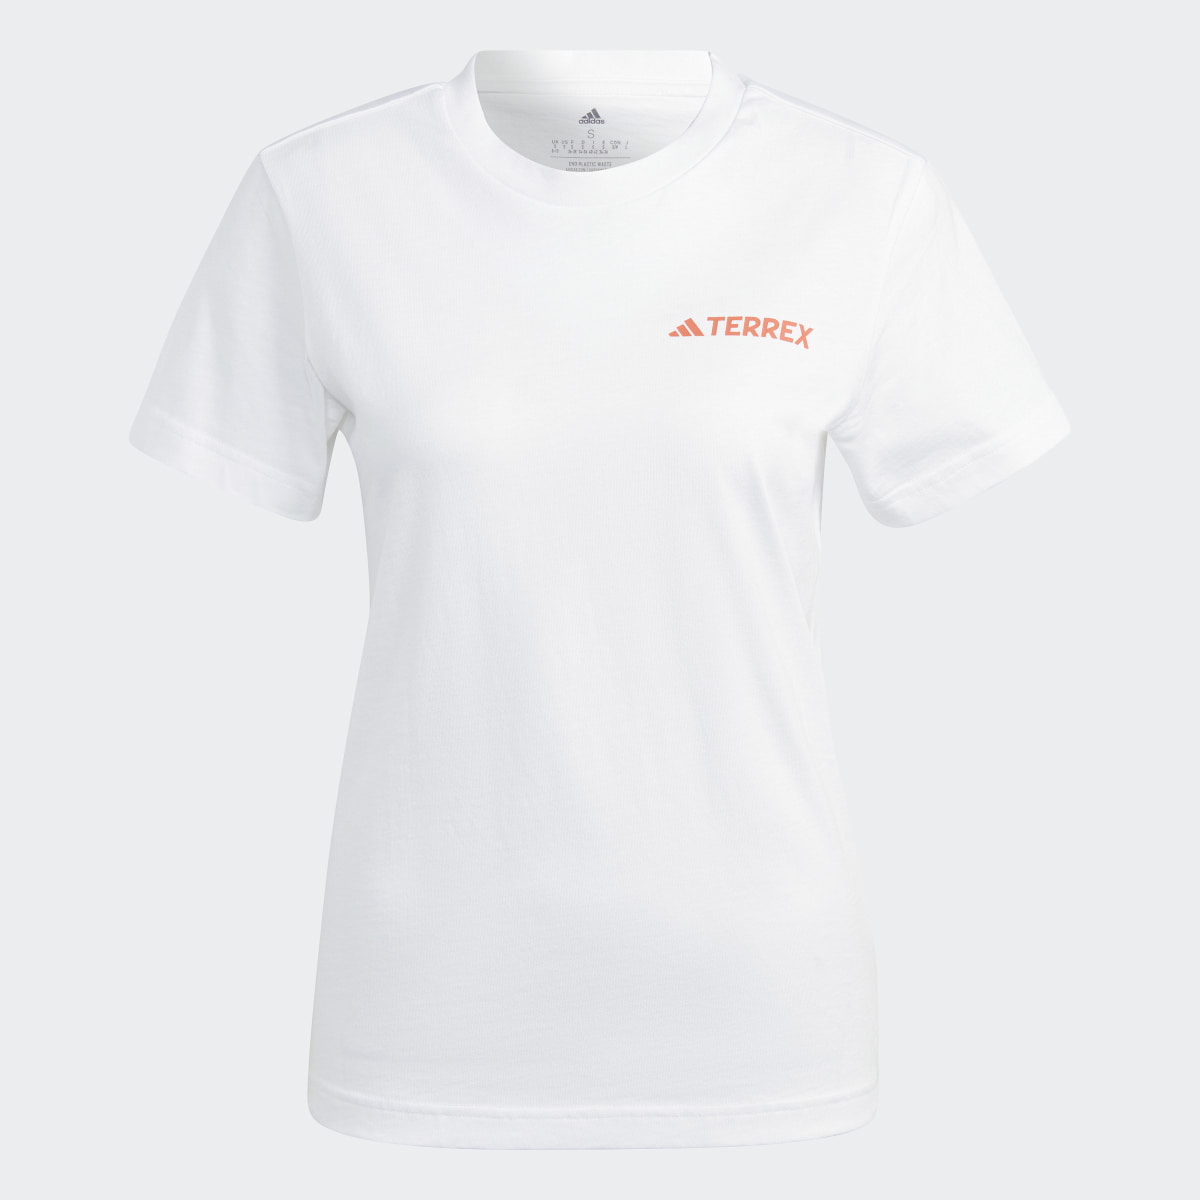 Adidas Terrex Graphic Altitude T-Shirt. 5